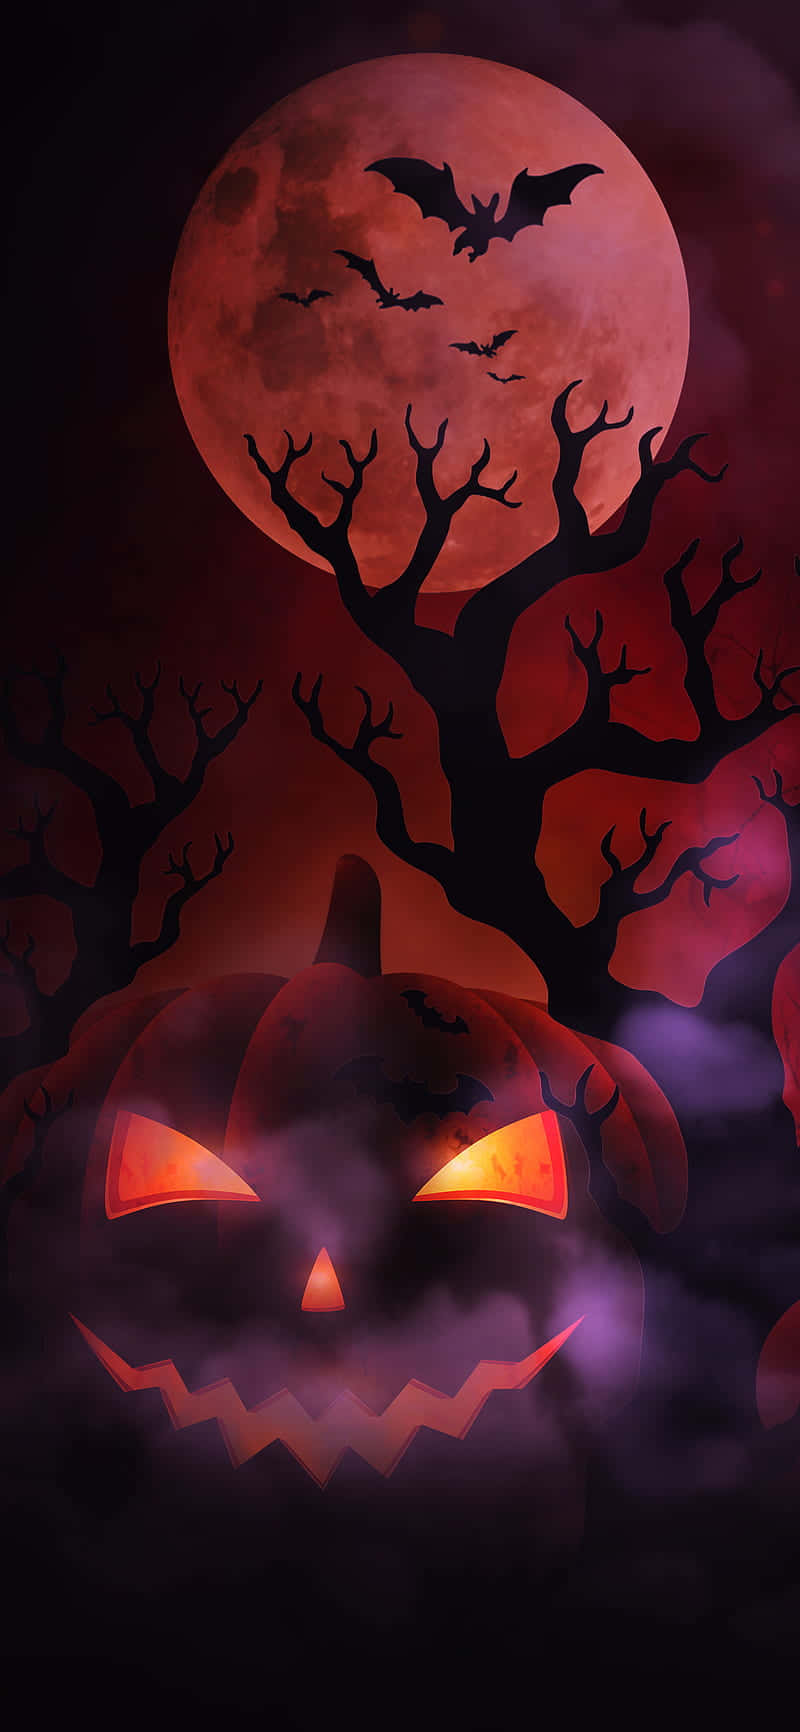 Download Carved Pumpkin Halloween Bats Wallpaper | Wallpapers.com